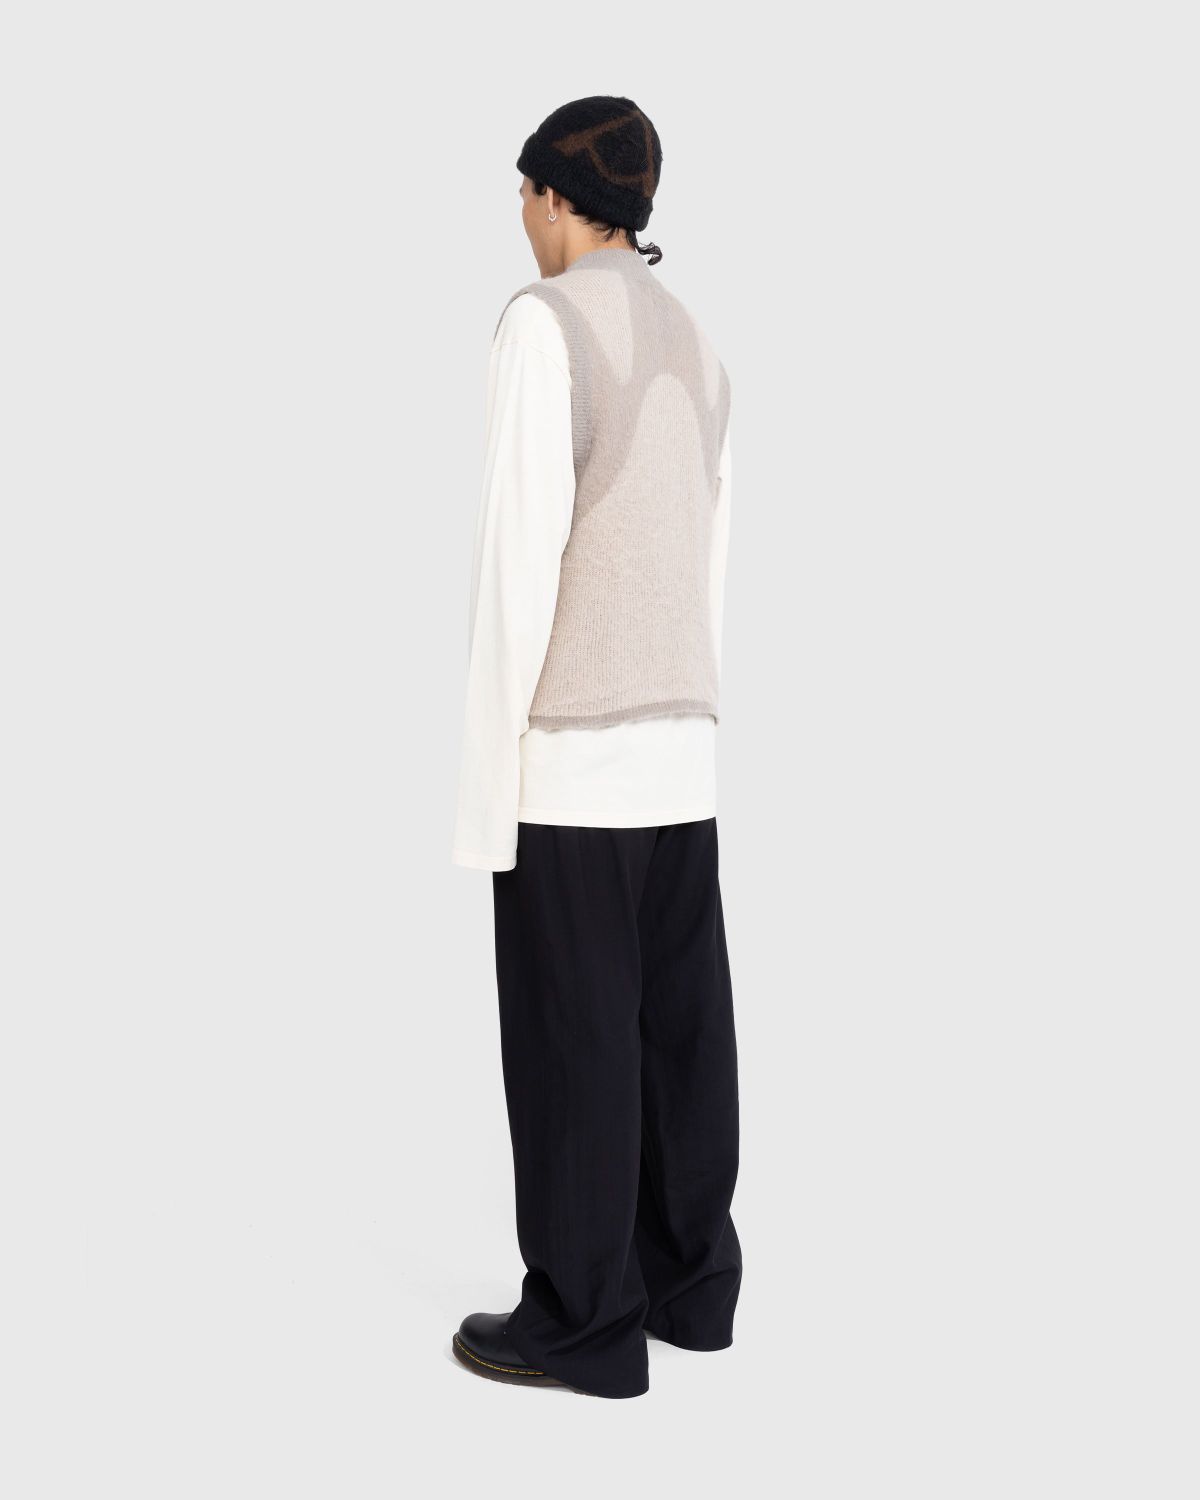 _J.L-A.L_ – Liquid Alpaca Vest Light Grey - Knitwear - Grey - Image 4